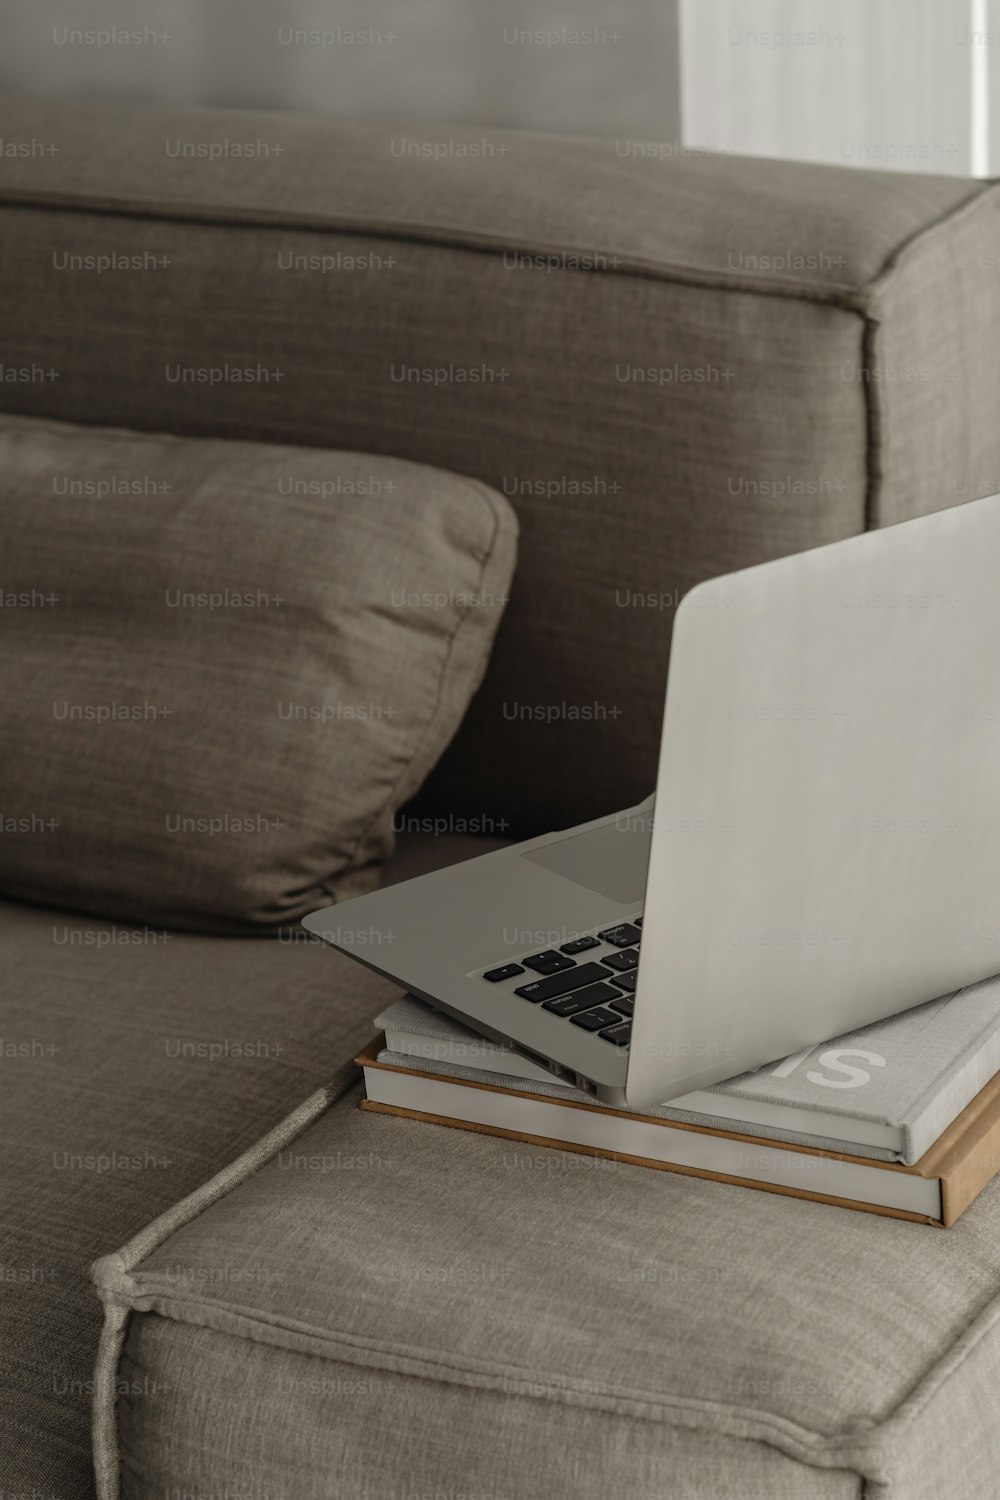 Un computer portatile seduto sopra un libro su un divano